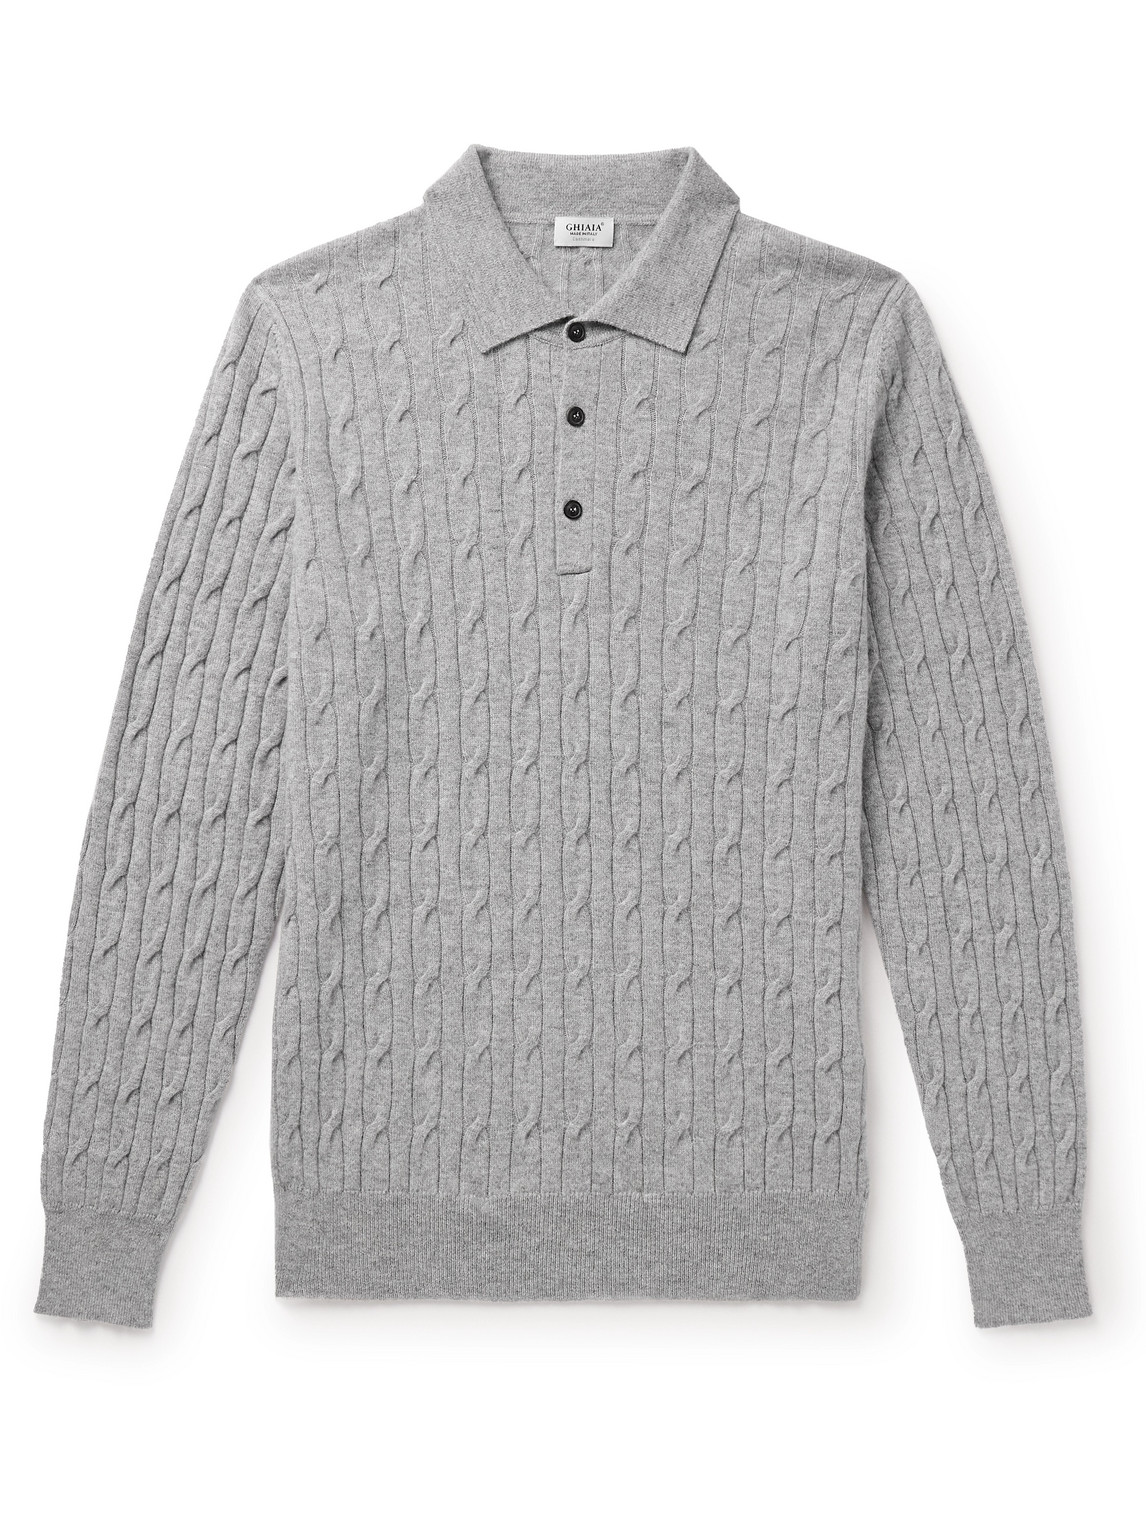 Ghiaia Cashmere - Cable-Knit Cashmere Polo Shirt - Men - Gray - M von Ghiaia Cashmere